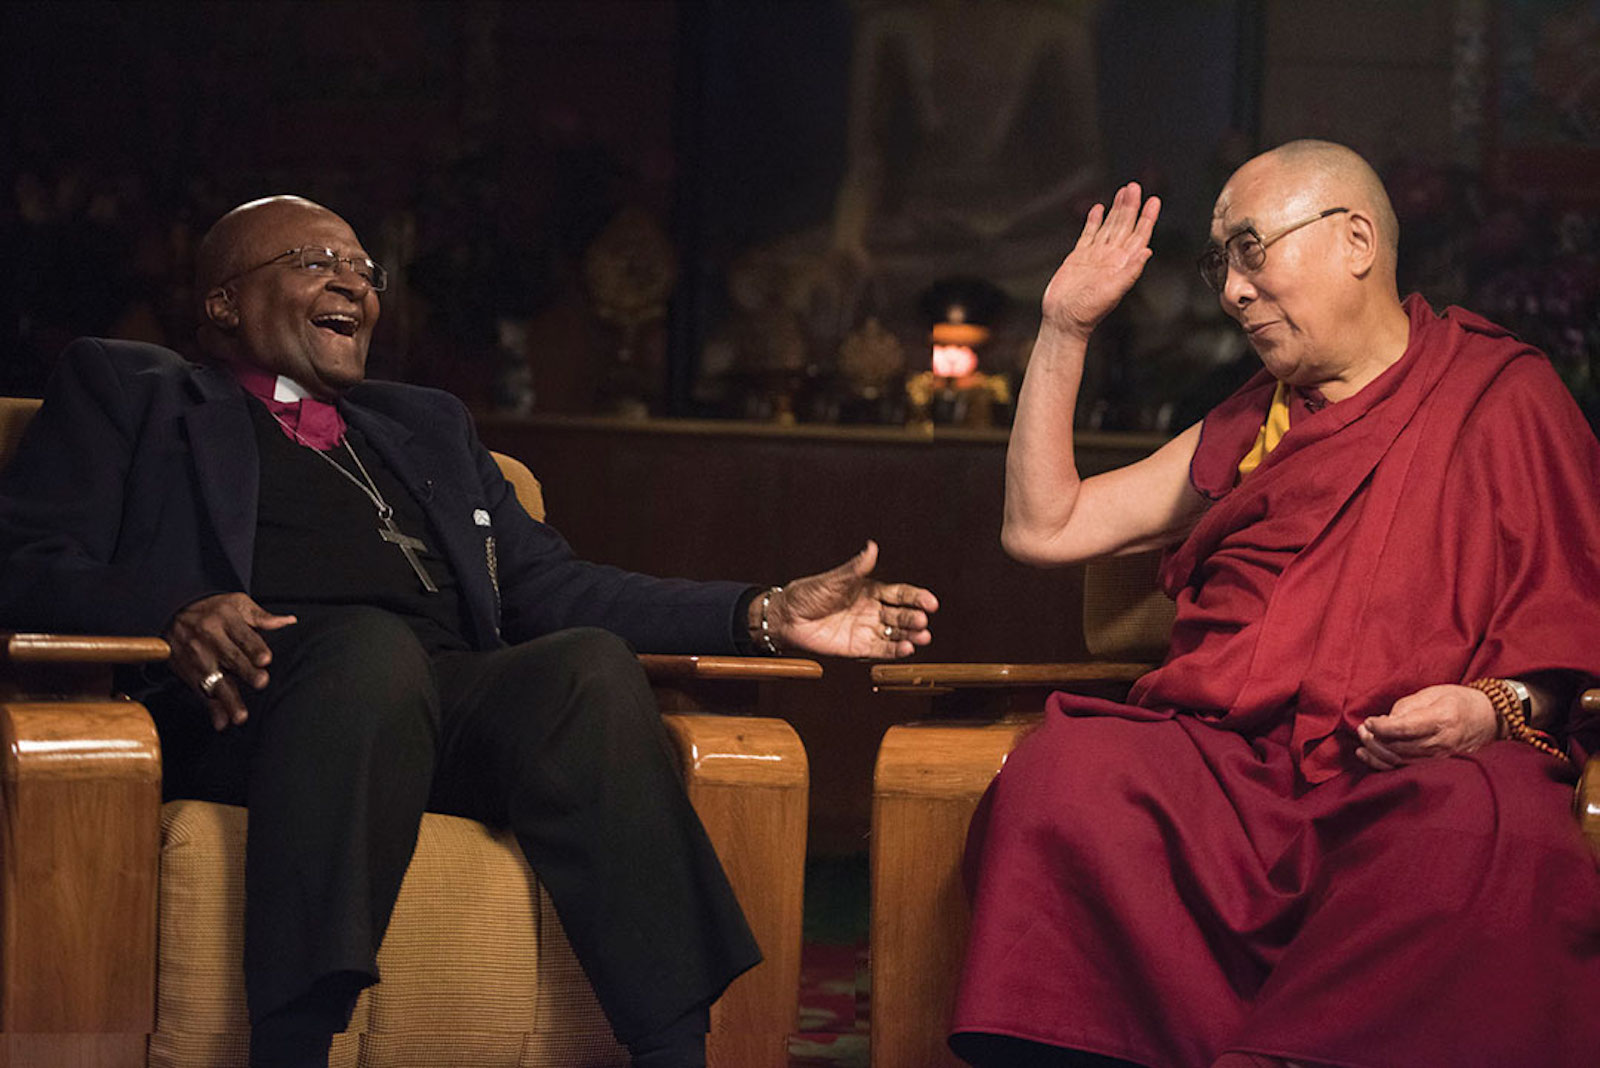 His Holiness the Dalai Lama and Archbishop Desmond Tutu mission joy film